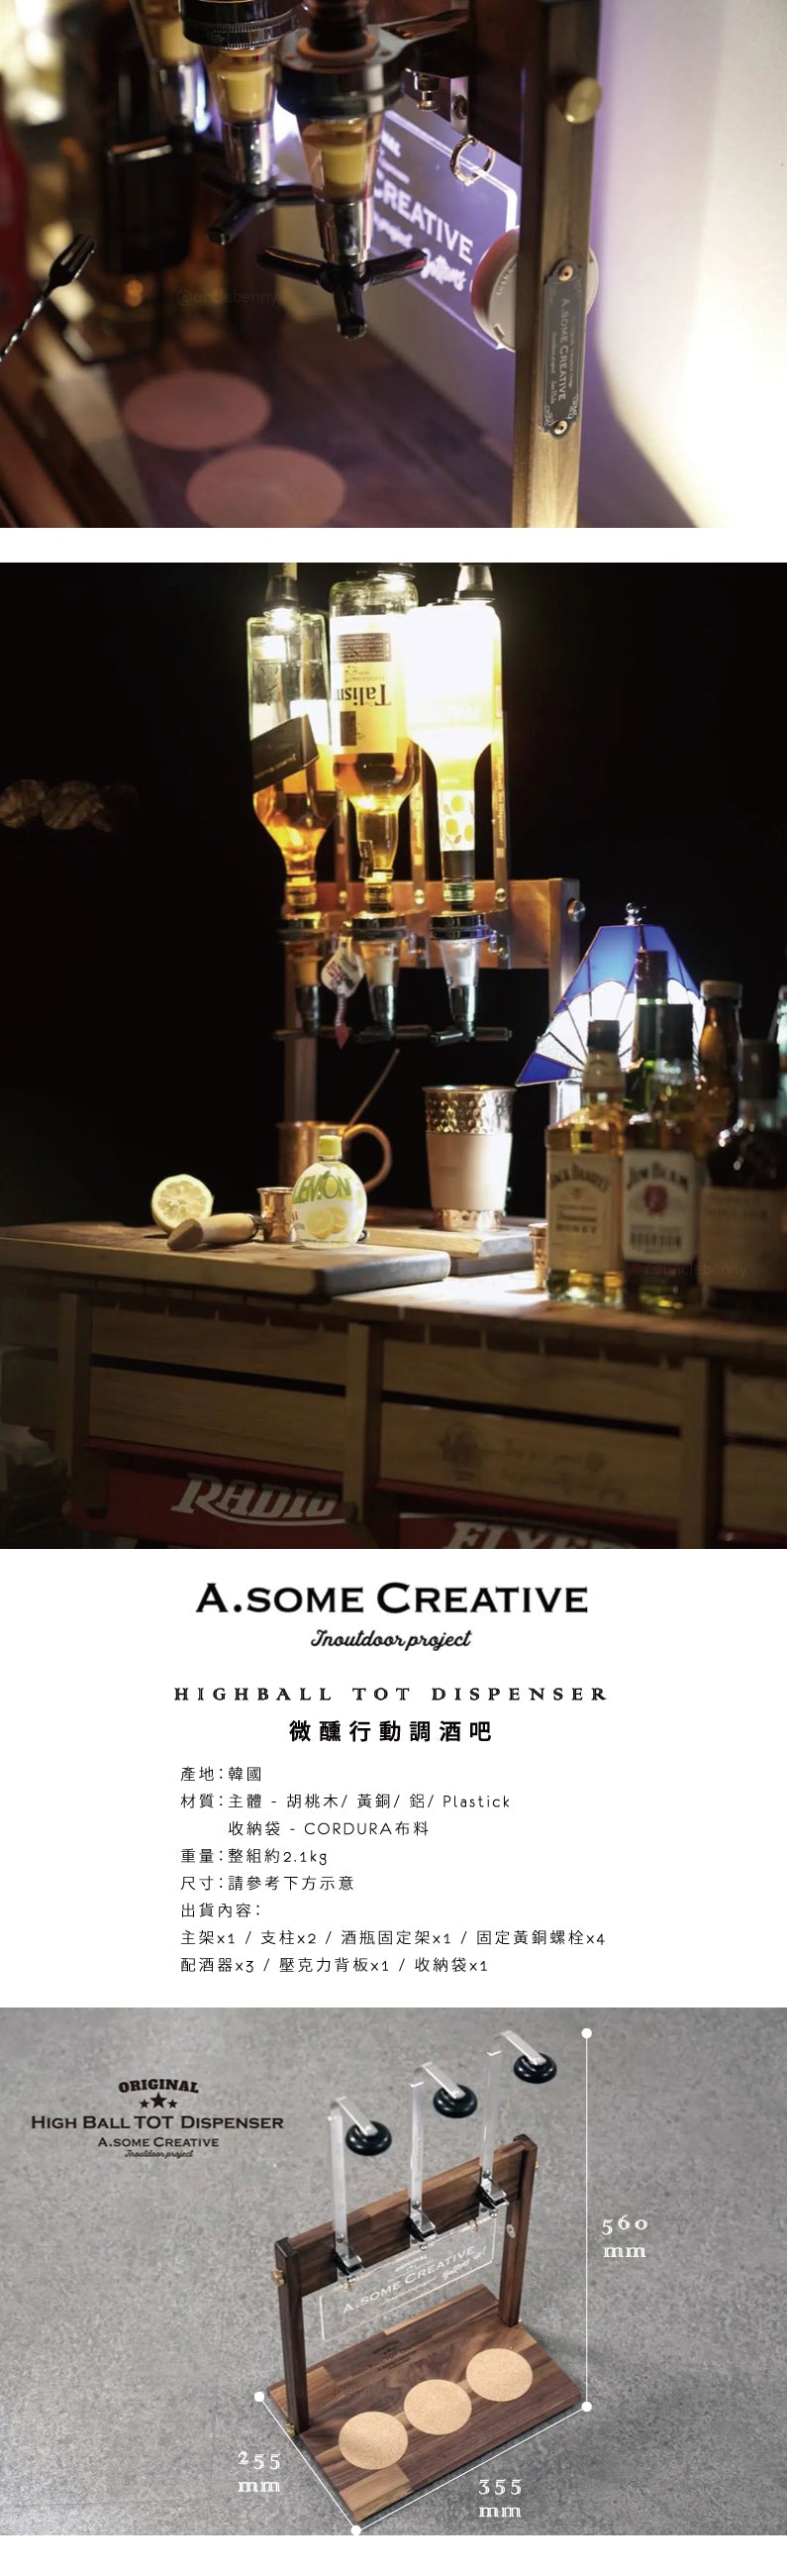 韓國A.SOME CREATIVE • 微醺行動調酒吧 HIGHBALL TOT DISPENSER